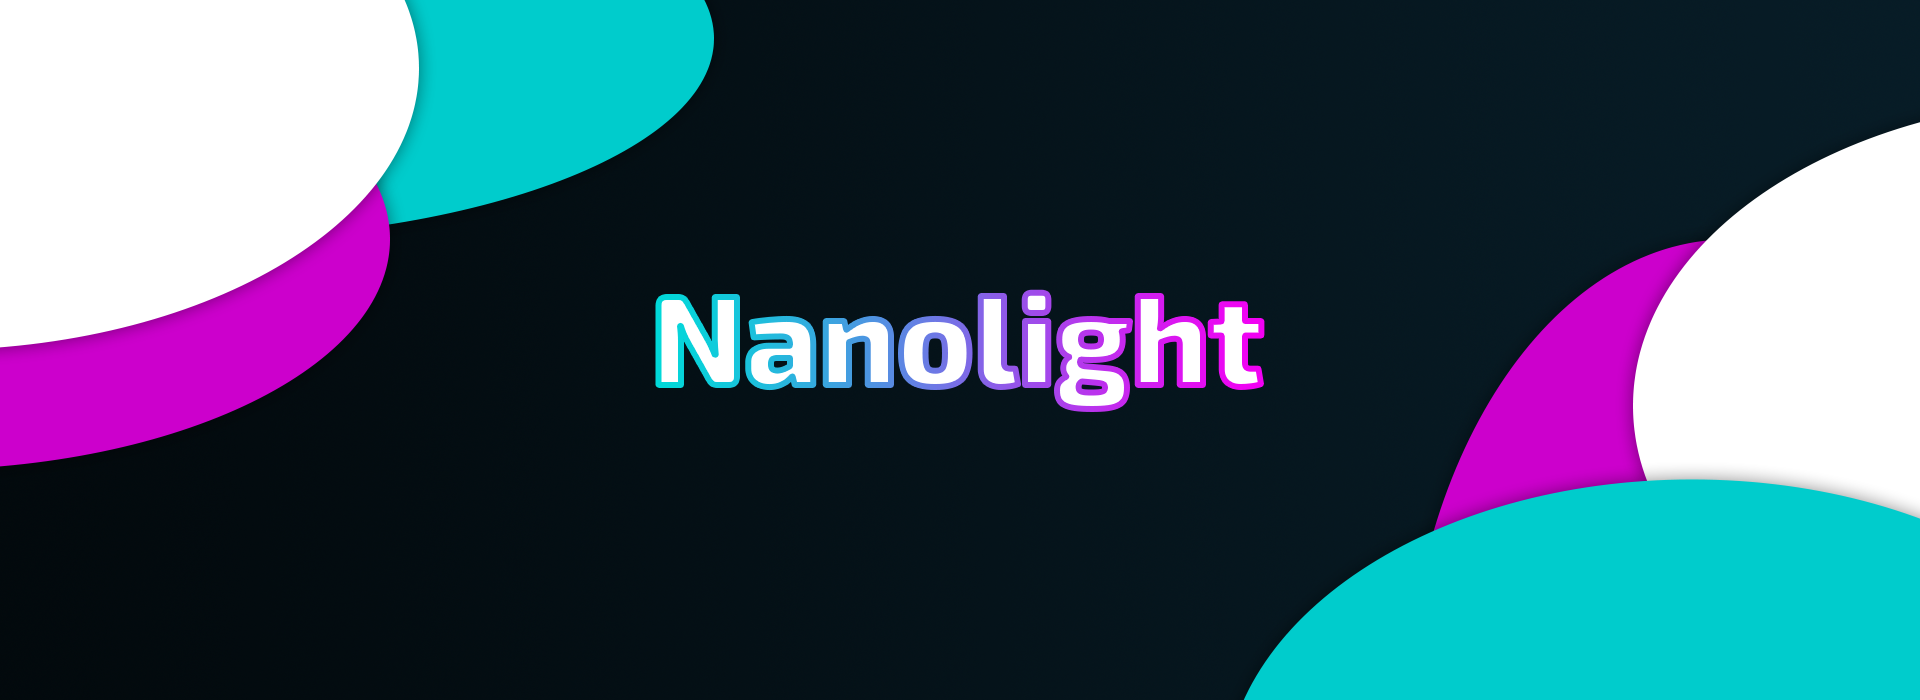 Nanolight